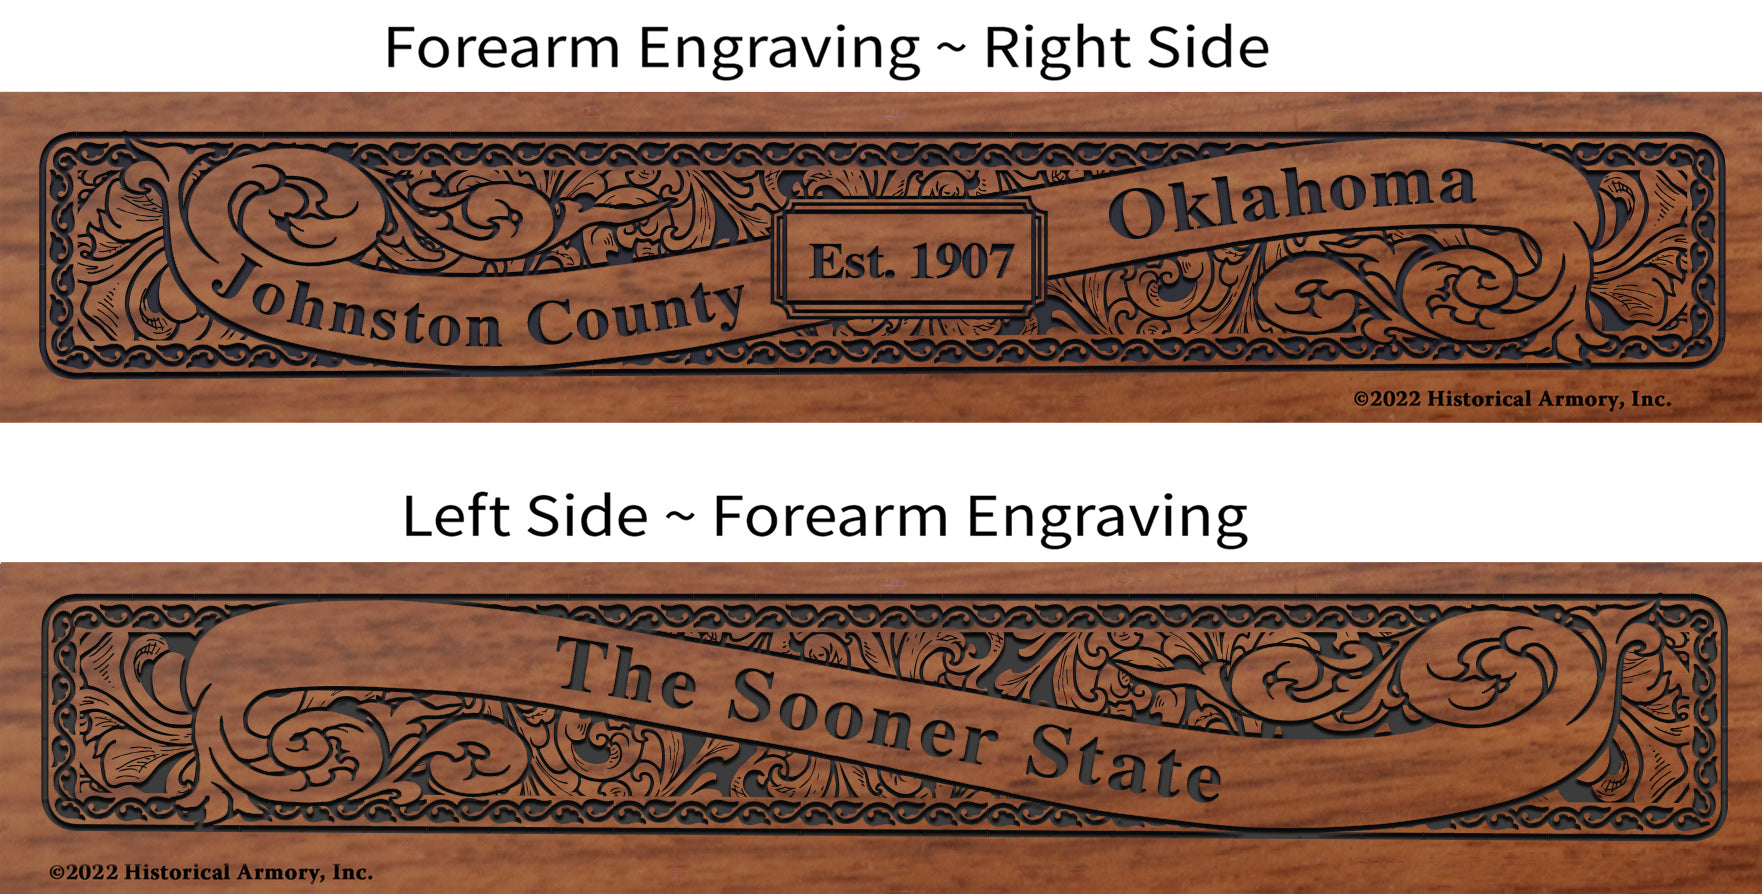 Johnston County Oklahoma Engraved Rifle Forearm